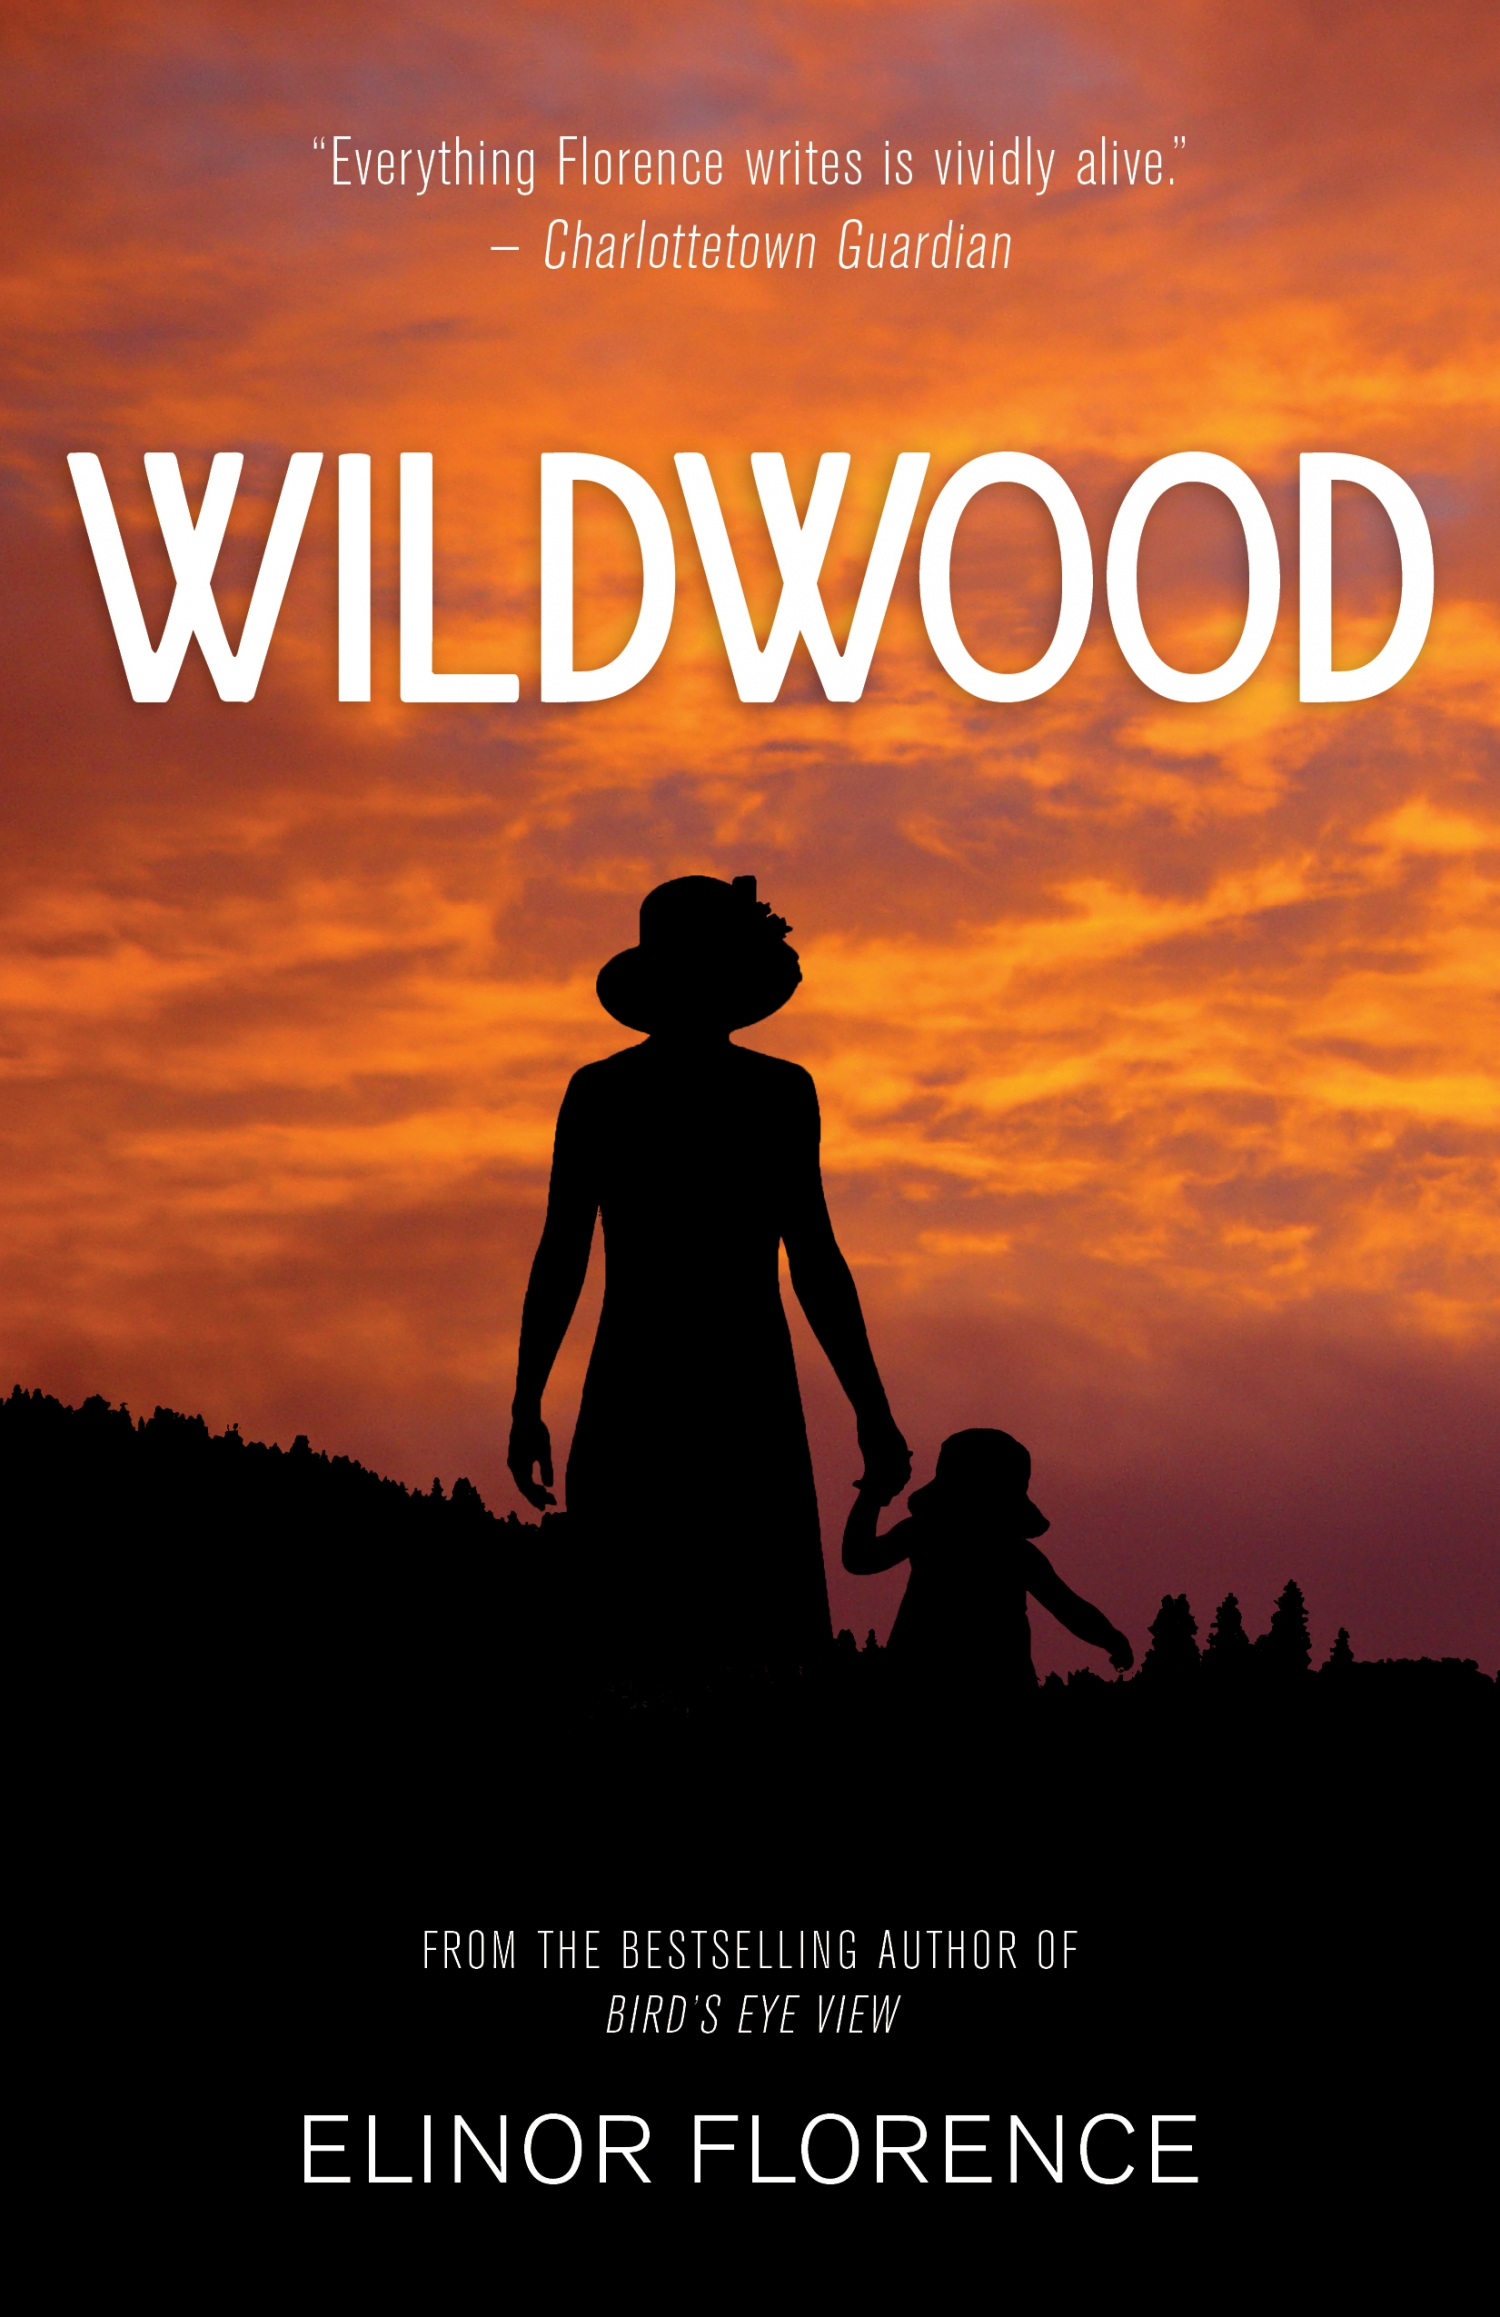 wildwood book review christian